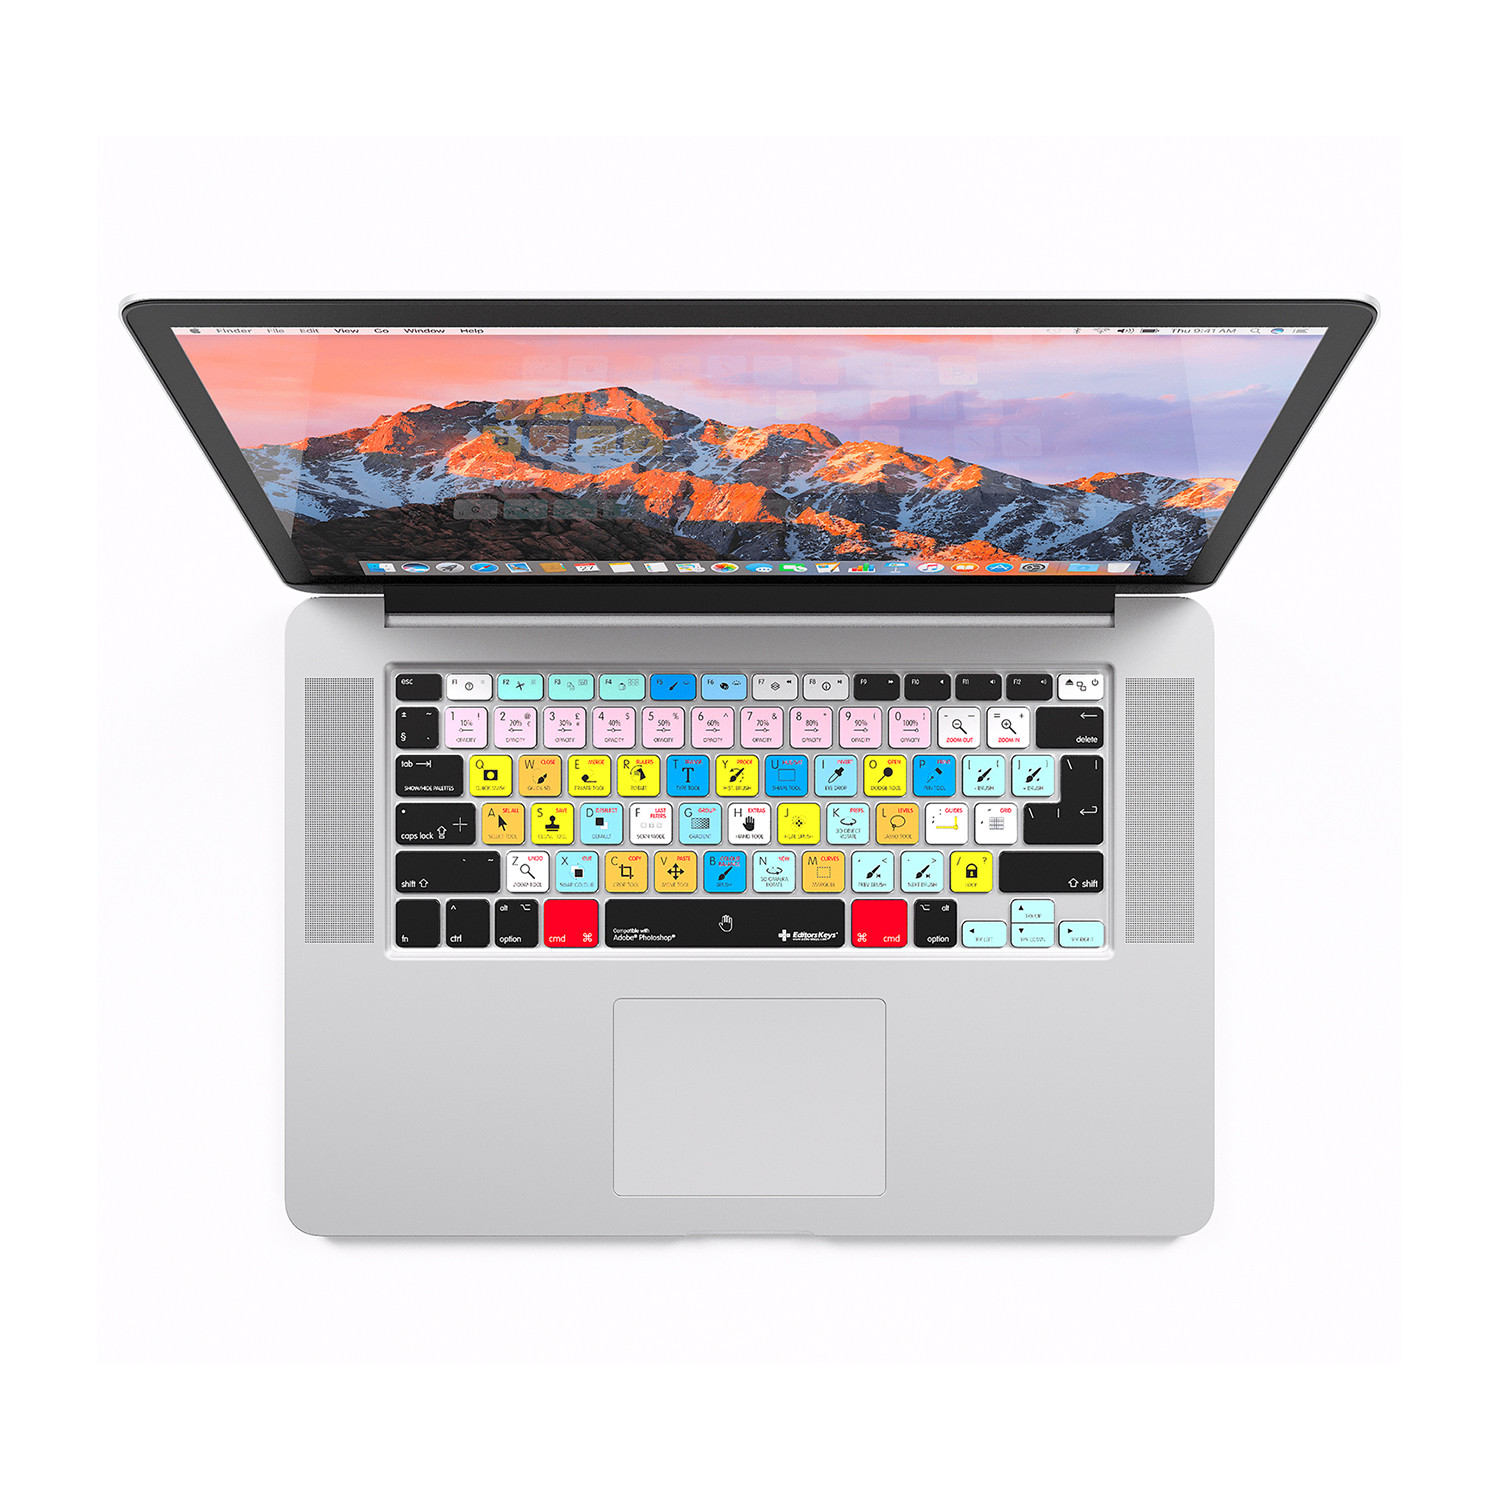 Adobe Photoshop // MacBook Pro Retina - Editors Keys - Touch of Modern